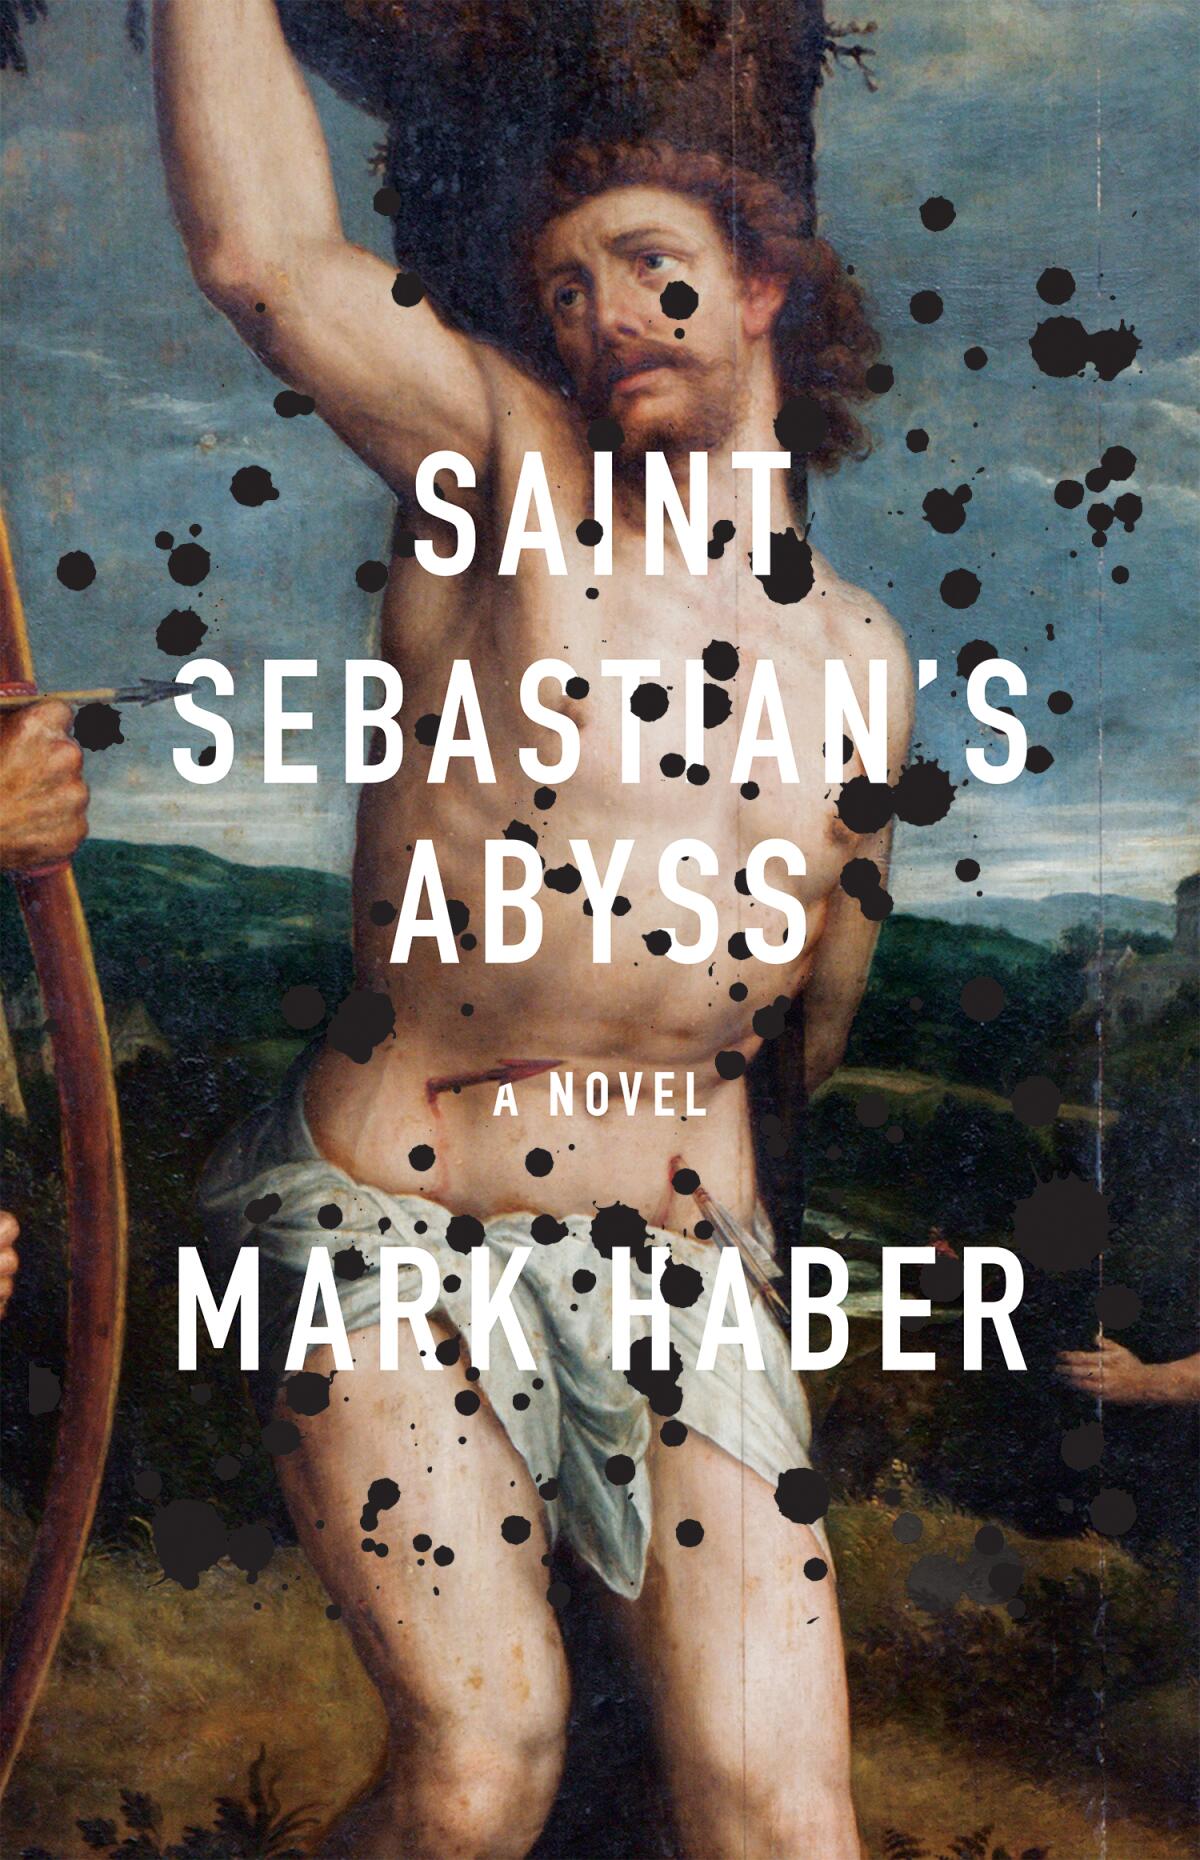 "Saint Sebastian's Abyss" by Mark Haber